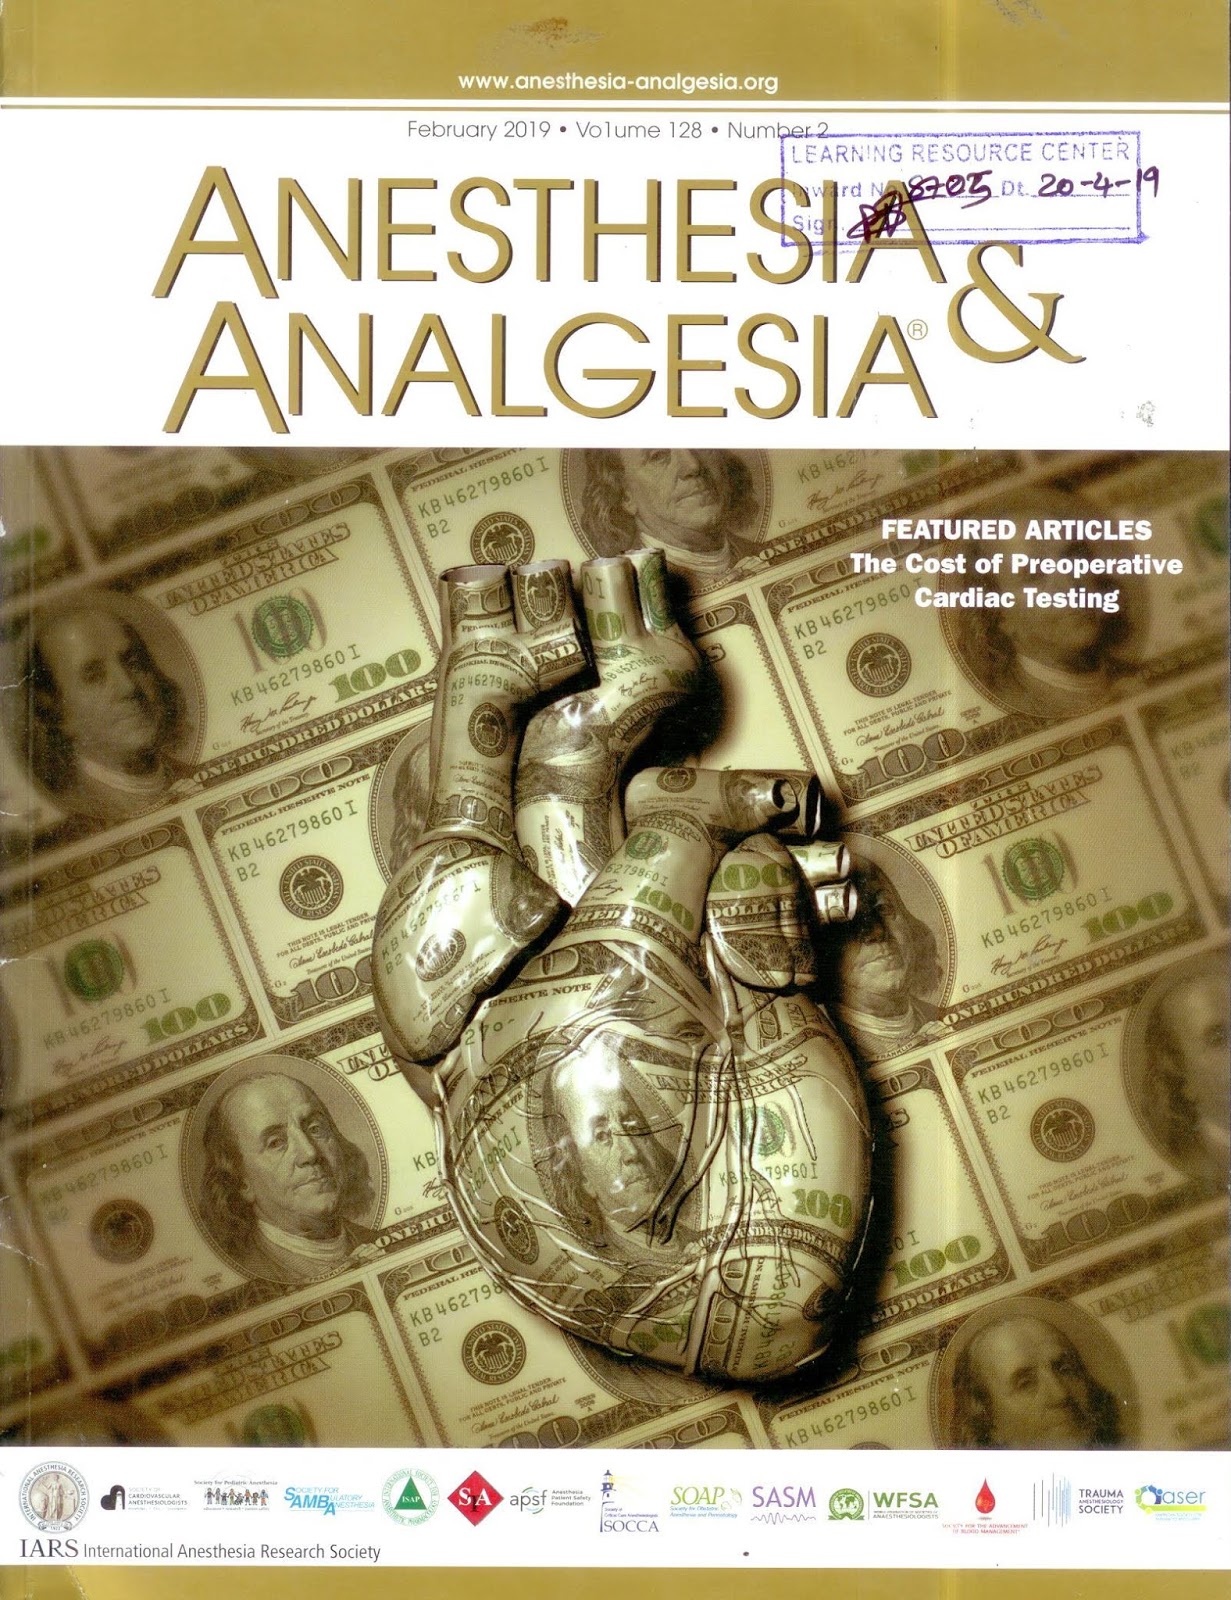 https://journals.lww.com/anesthesia-analgesia/toc/2019/02000